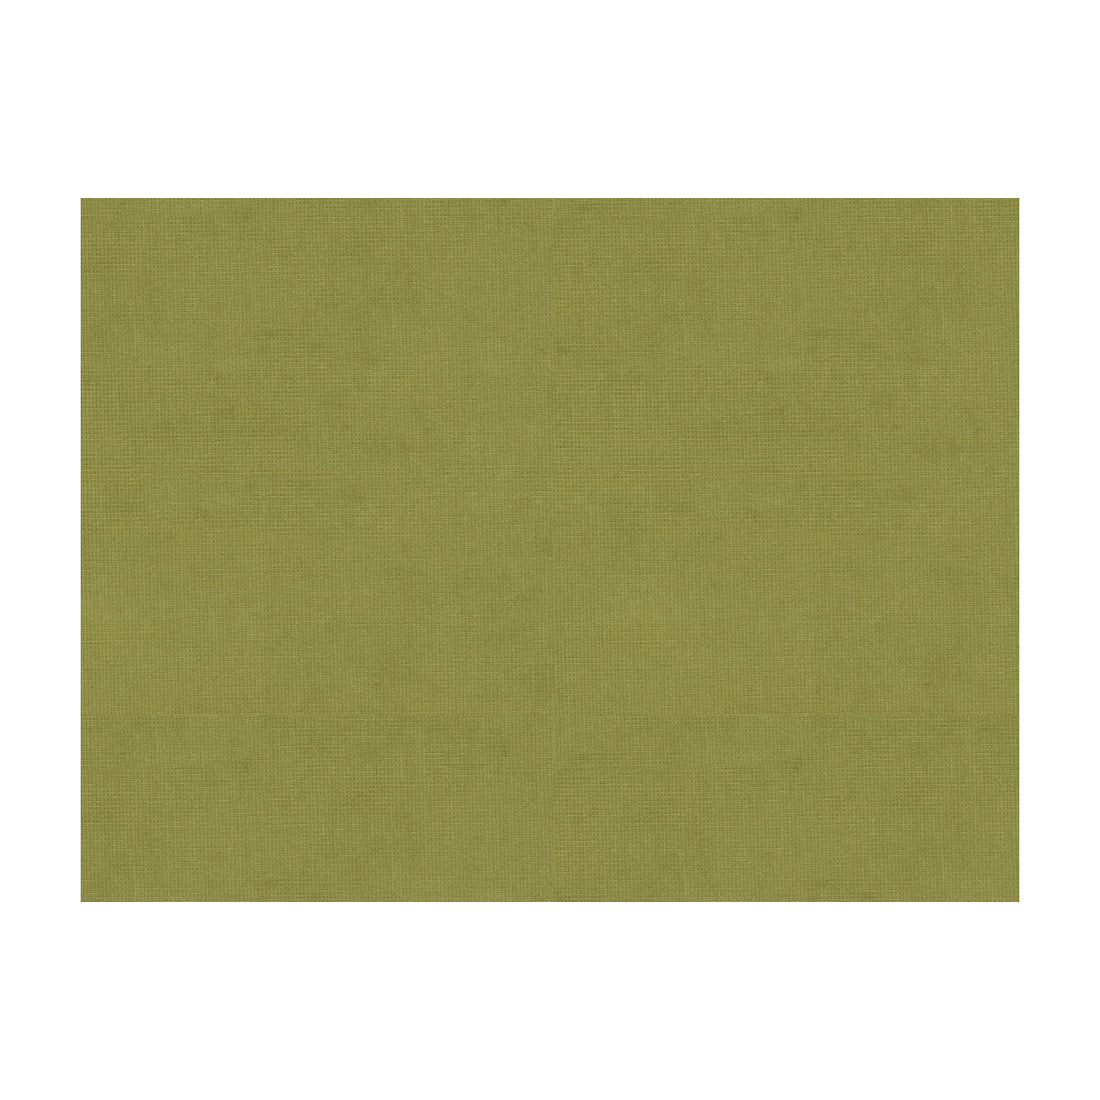 Charmant Velvet fabric in fern color - pattern 8013150.303.0 - by Brunschwig &amp; Fils